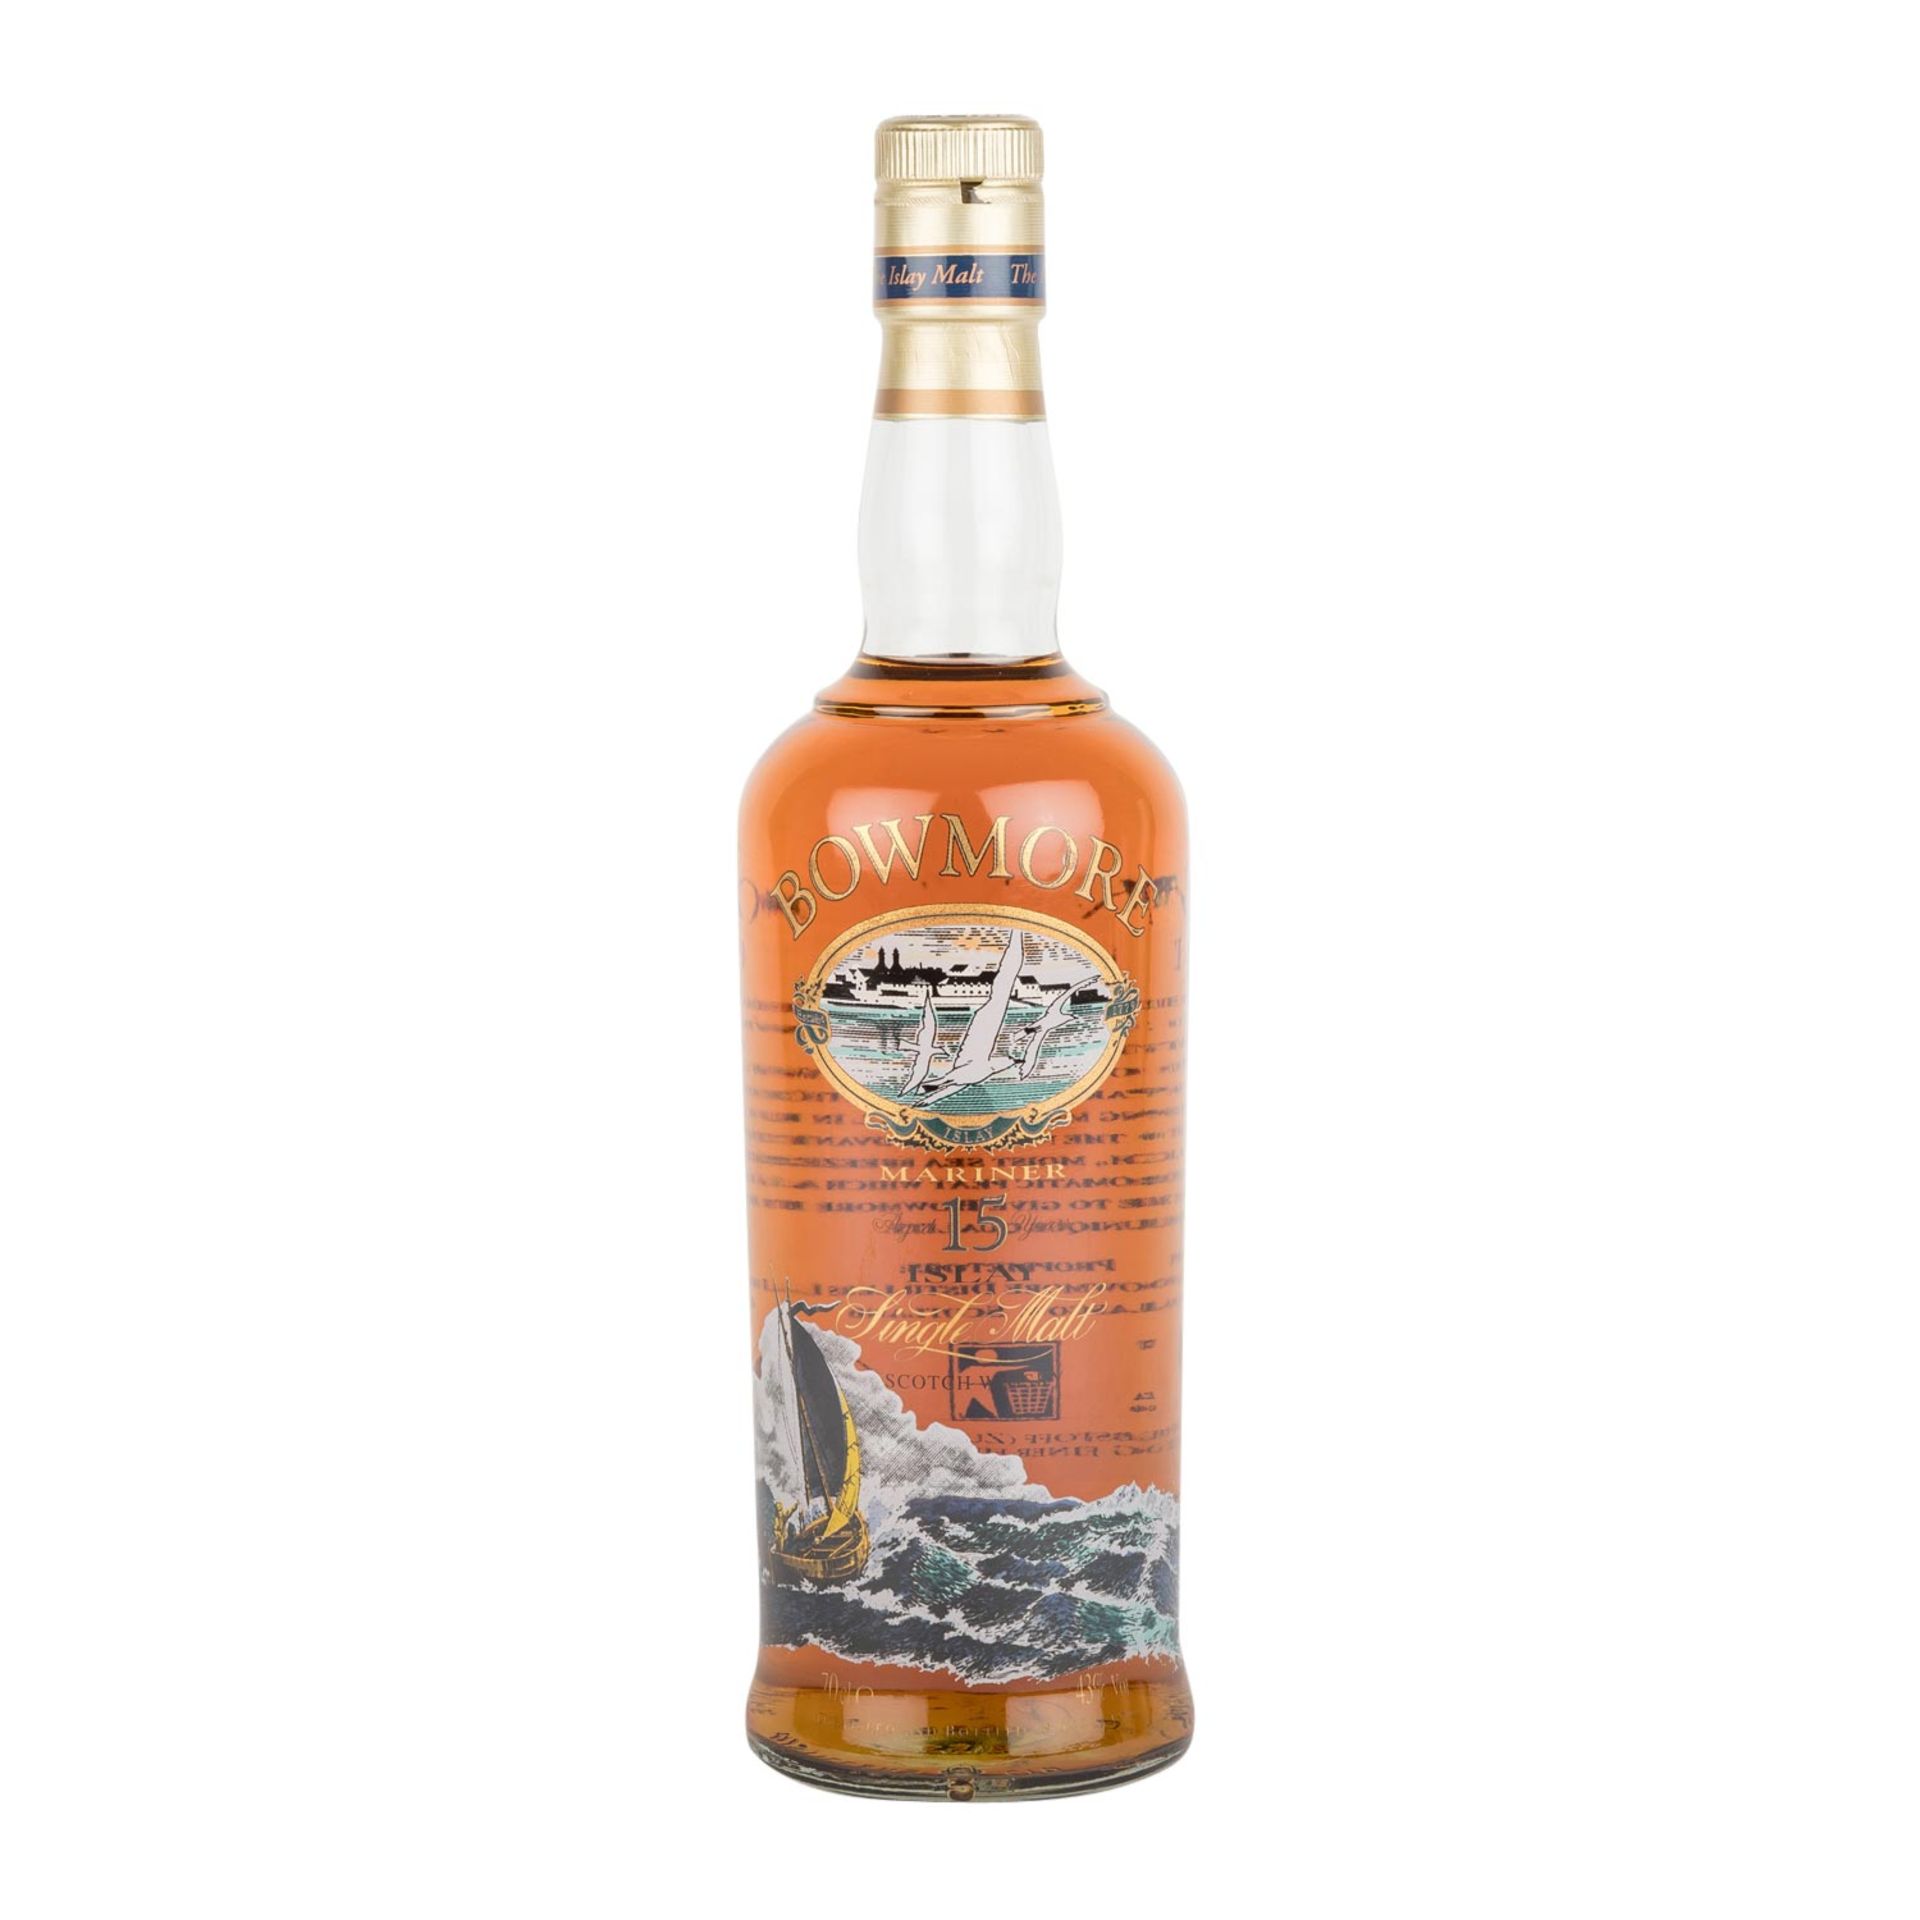 BOWMORE Single Malt Scotch Whisky 'MARINER', 15 years - Image 2 of 5